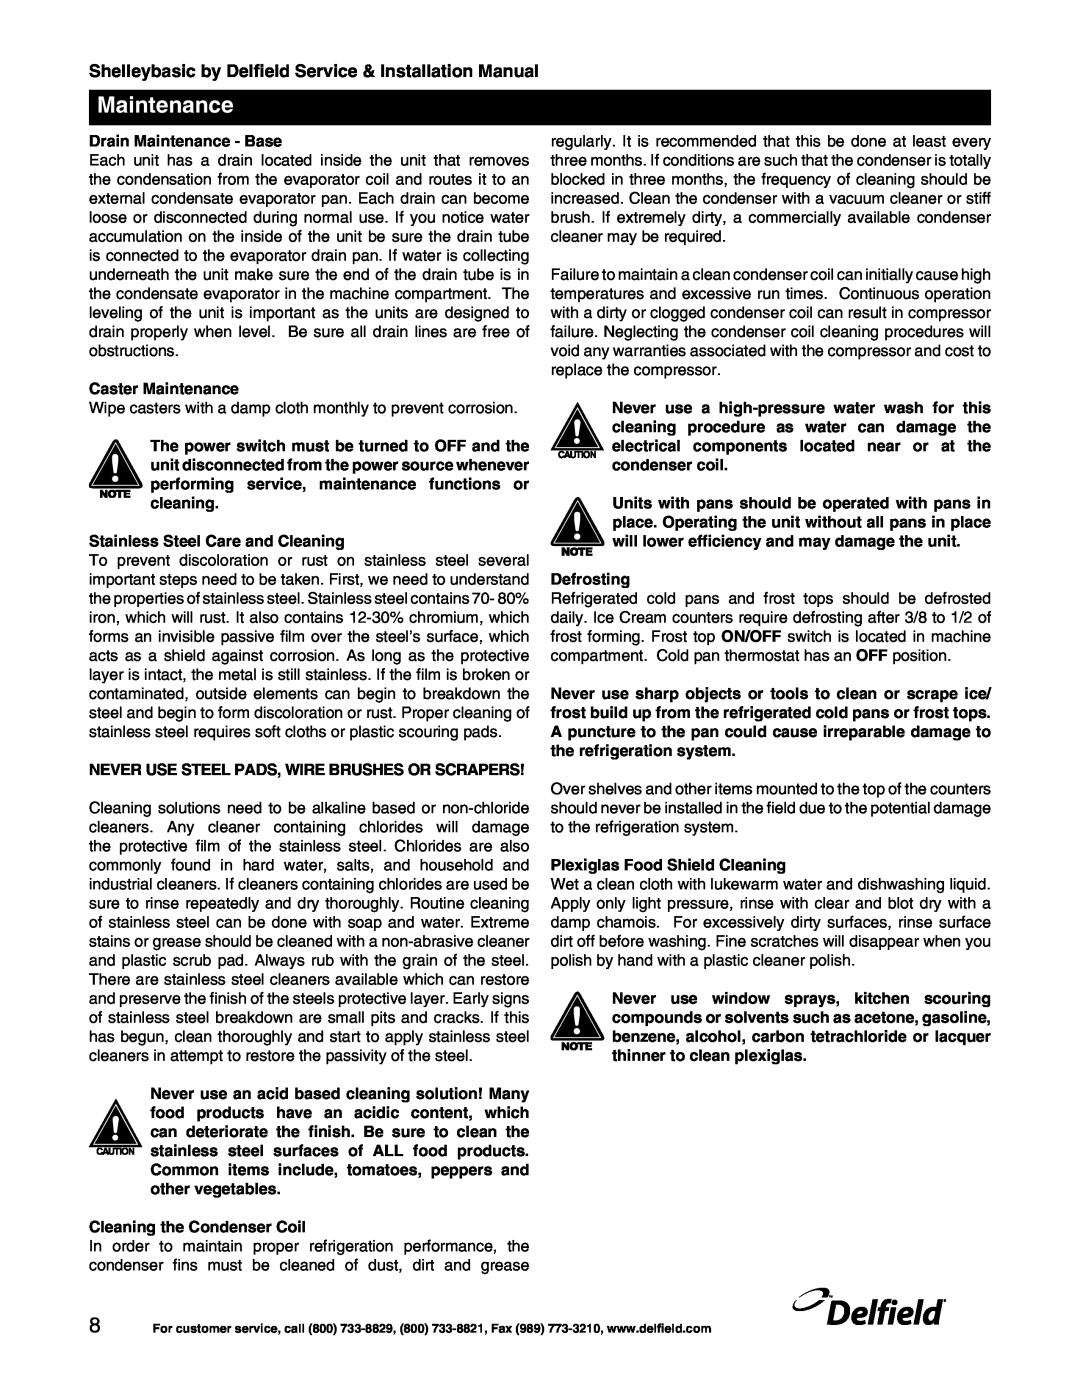 Delfield manual Maintenance, Shelleybasic by Delfield Service & Installation Manual 